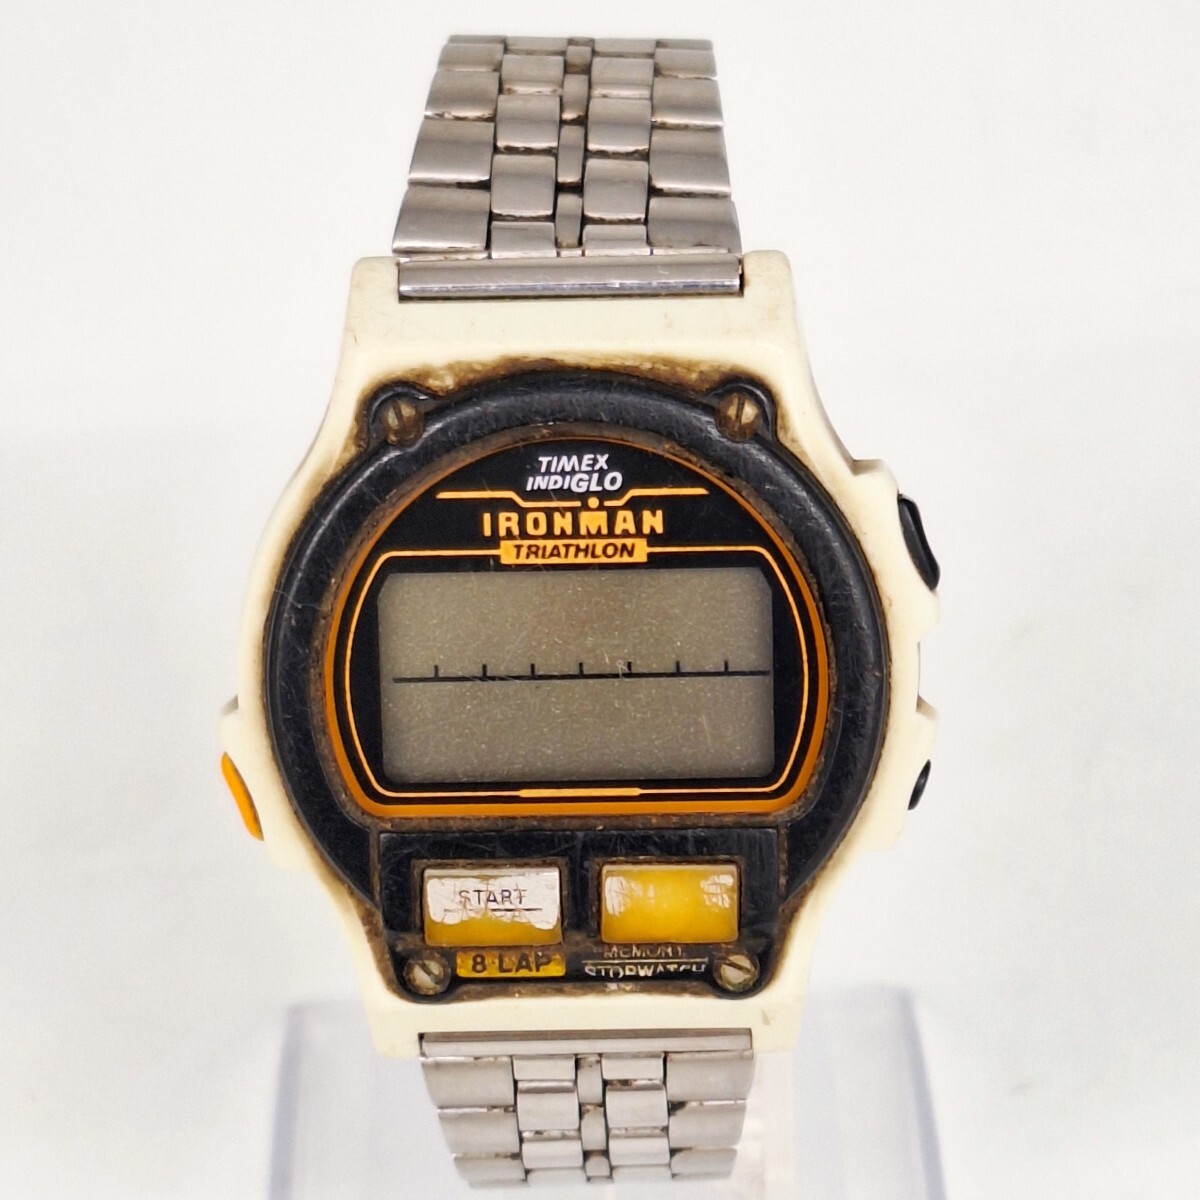 307 TIMEX タイメックス INDIGLO IRONMAN アイロンマン TRIATHLON 731-A メンズ腕時計 腕時計 時計 クォーツ デジタル ウォッチ WK_画像2